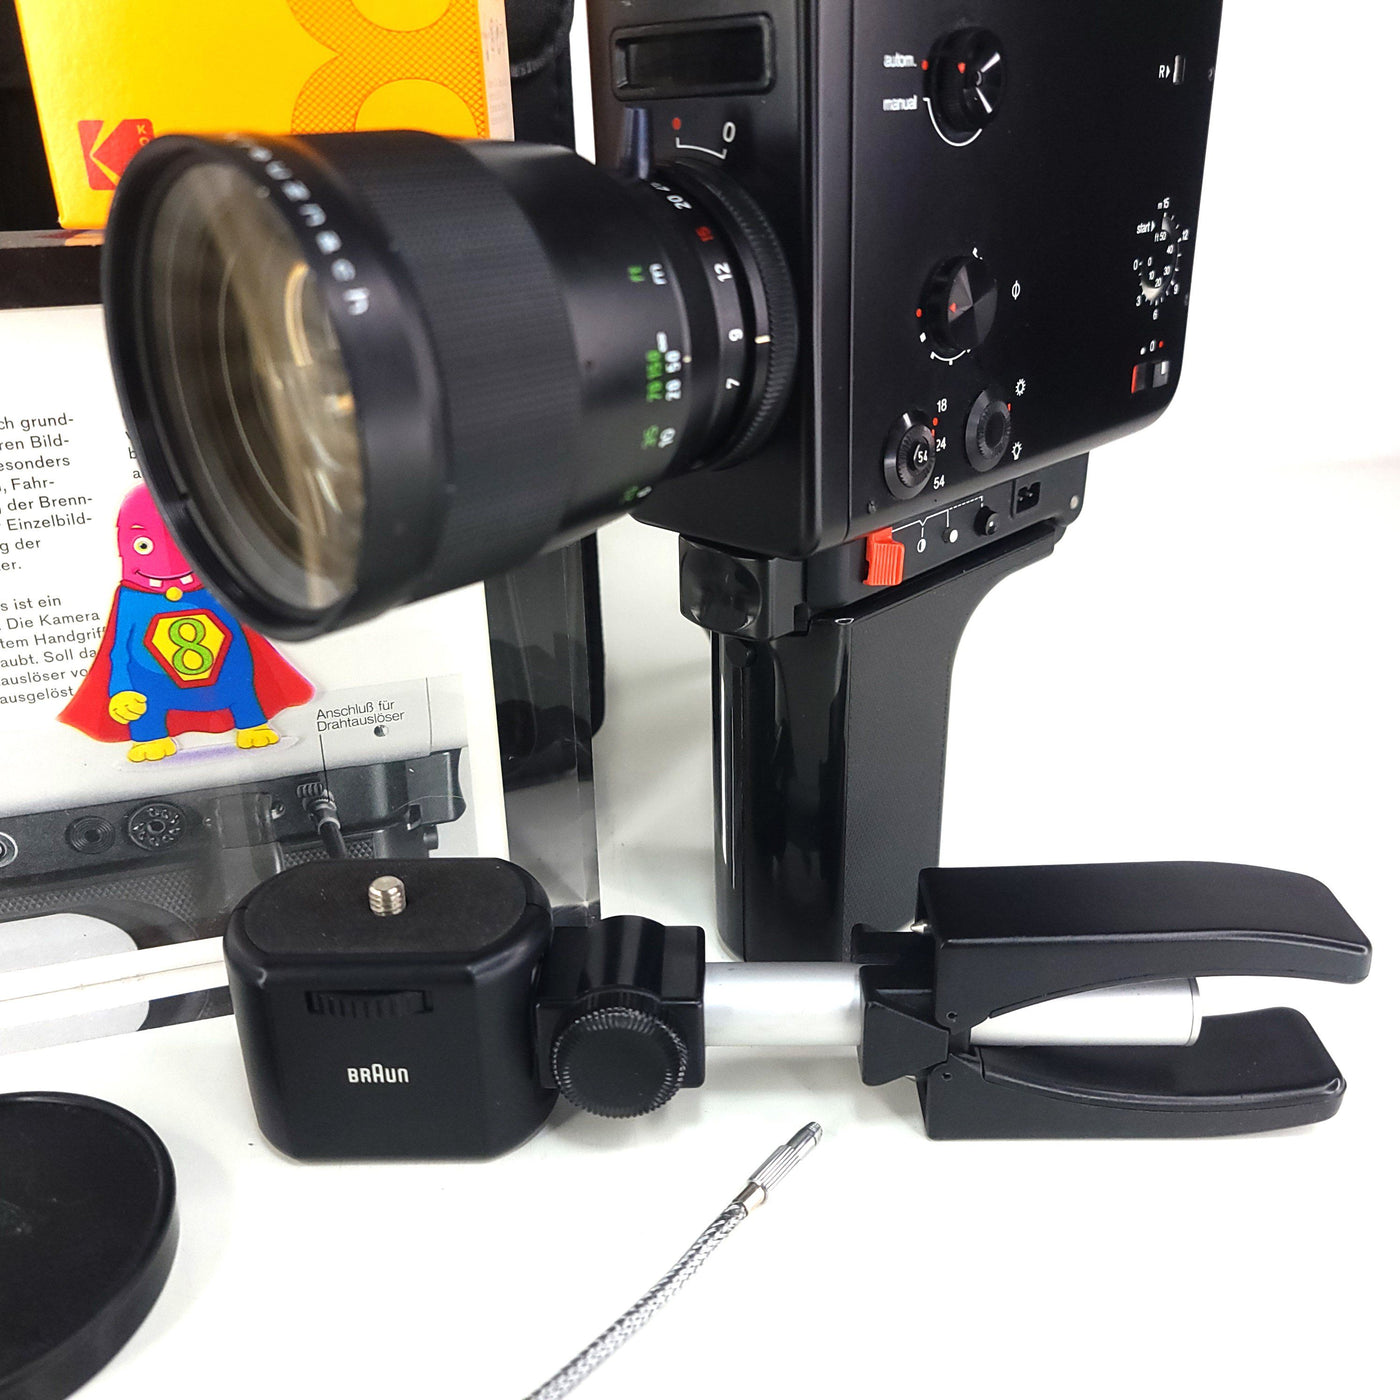 Nizo S800 Super 8 Camera Filmmaker's Bundle with plenty of Accessories! Super 8 Cameras Braun Nizo 